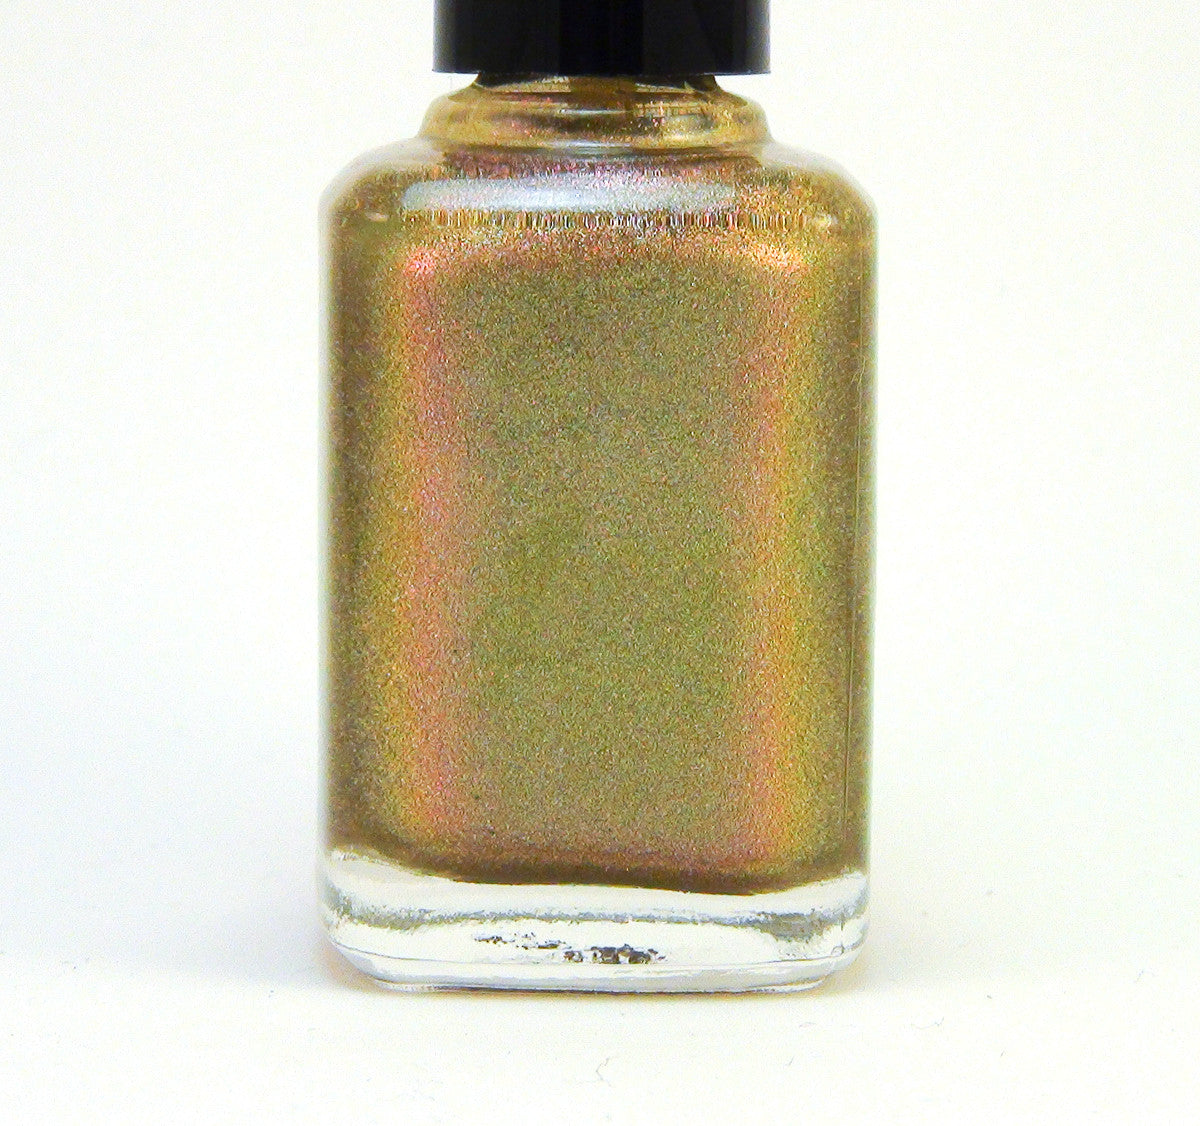 Hallucinate - bronze/green/pinkish/copper multichrome holographic DISCONTINUED